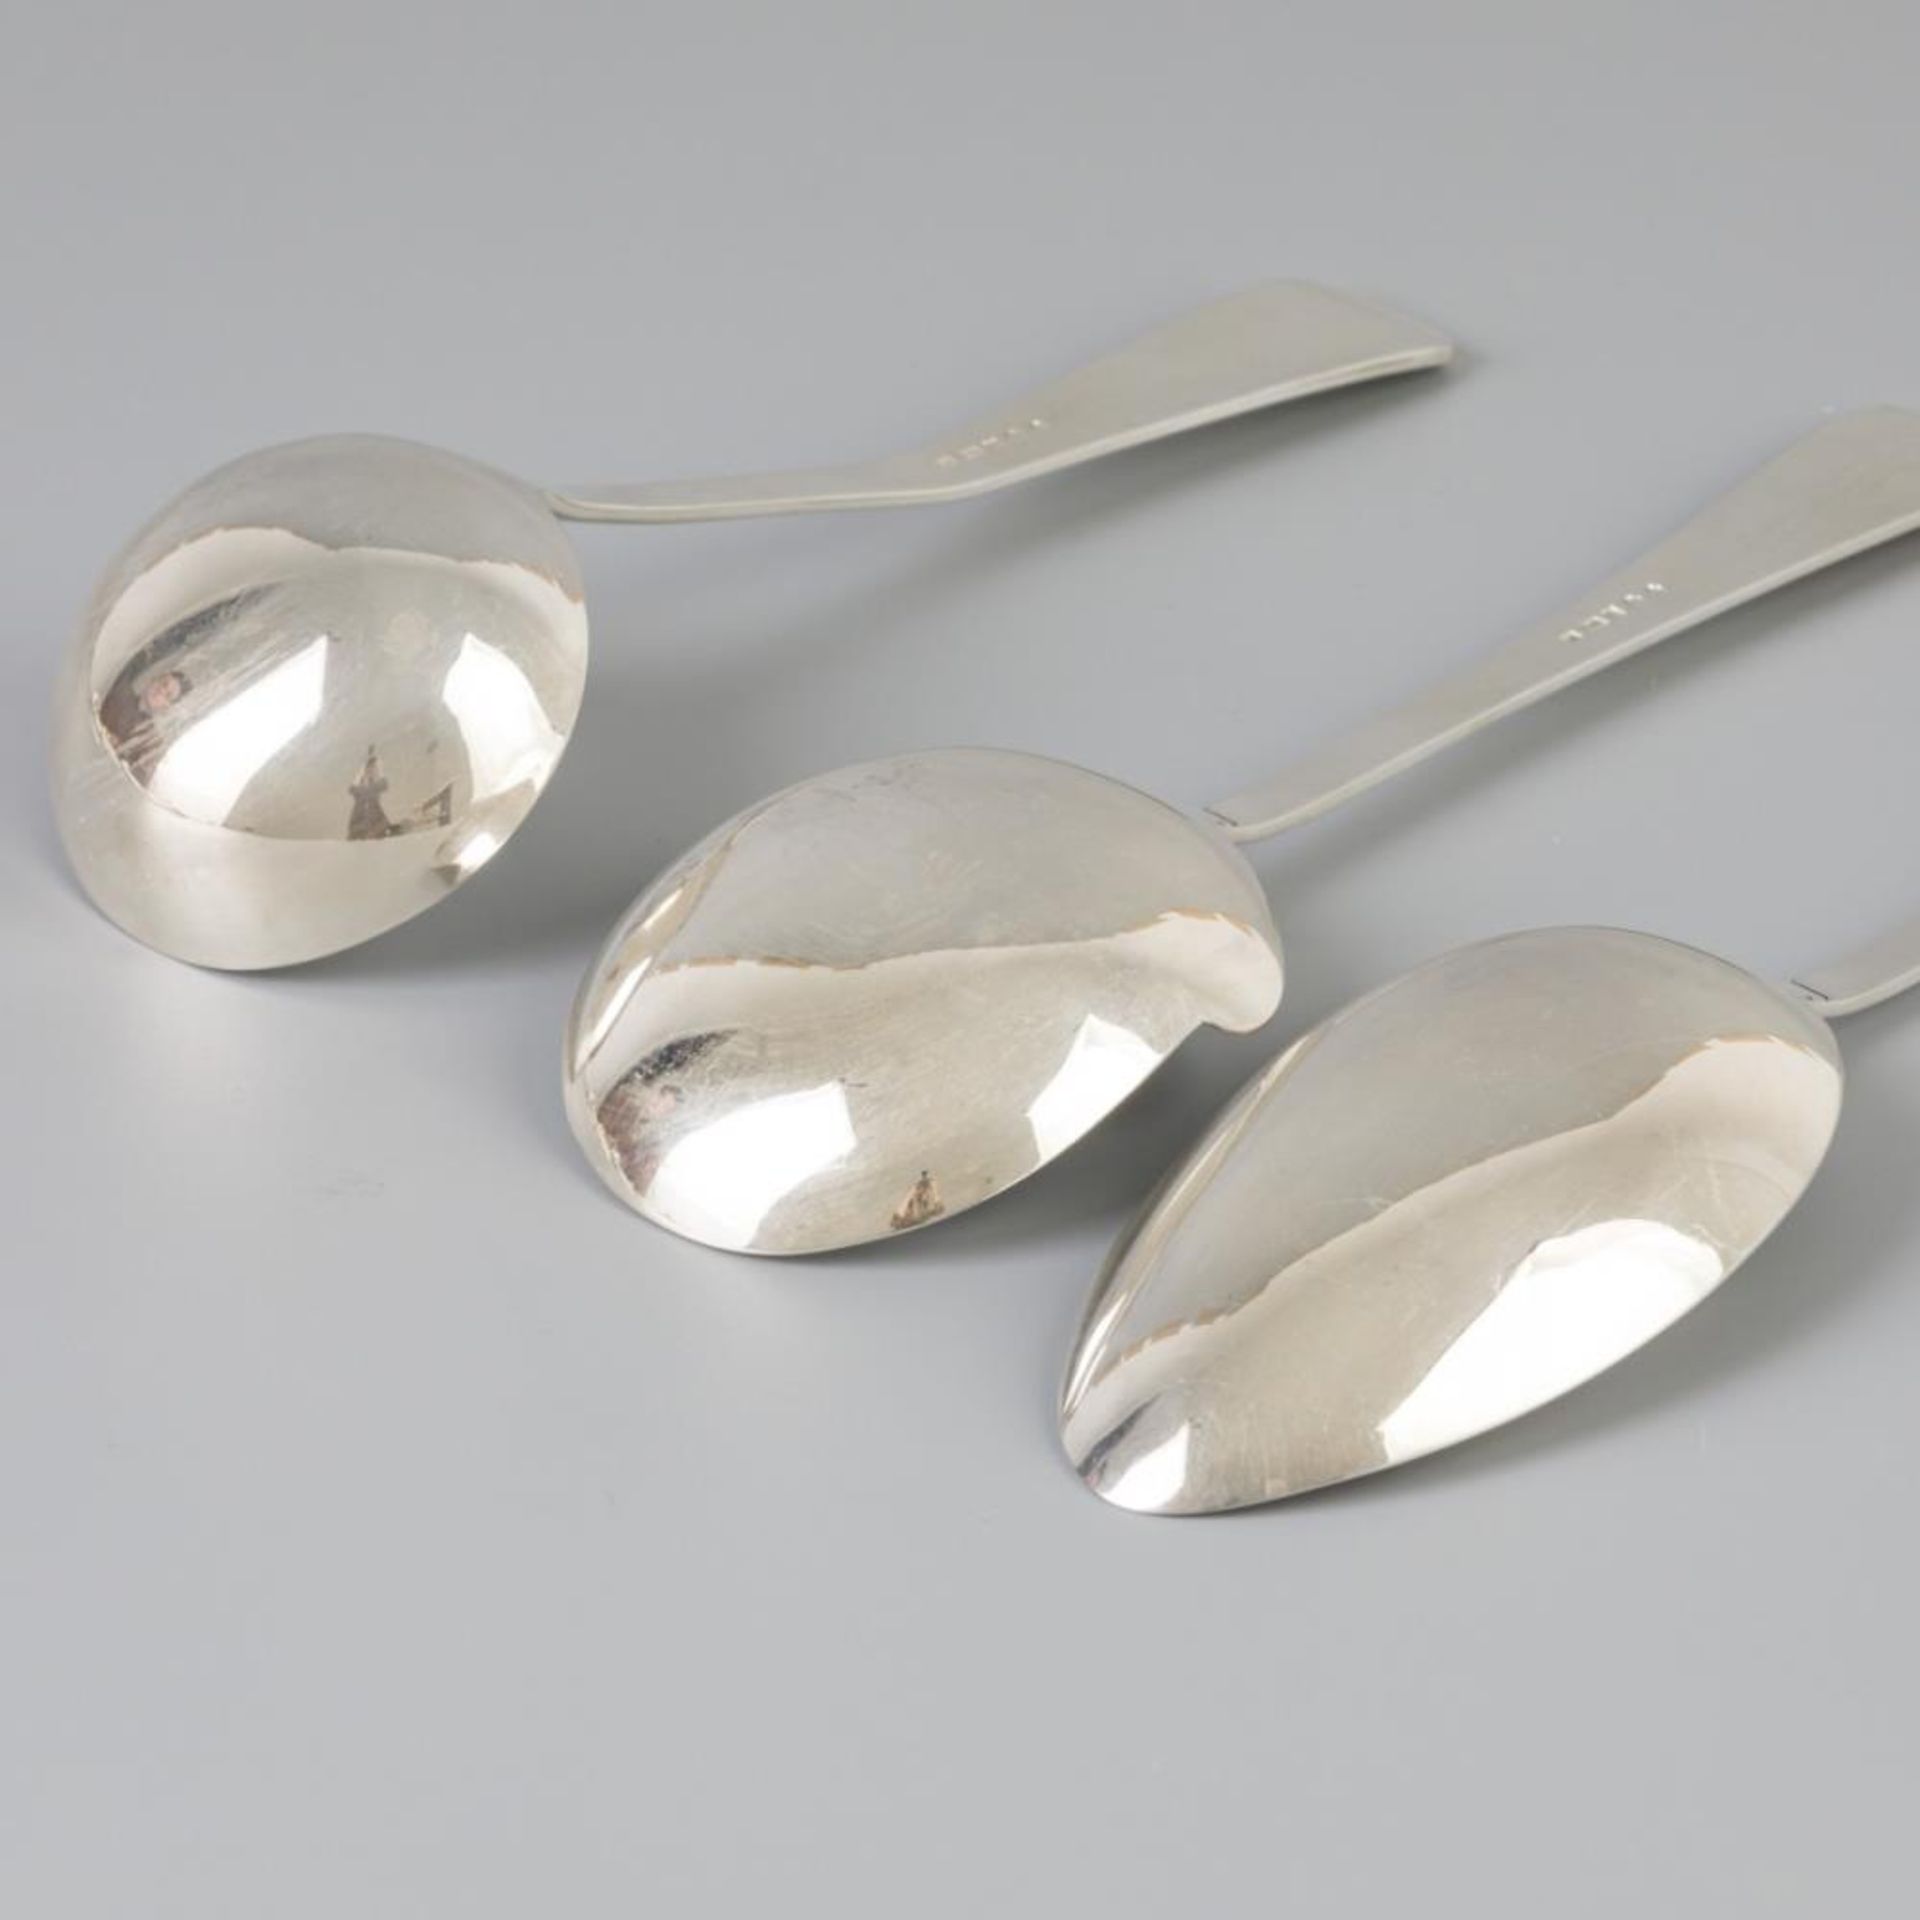 3 piece set of spoons / laddles "Haags Lofje" silver. - Bild 4 aus 5